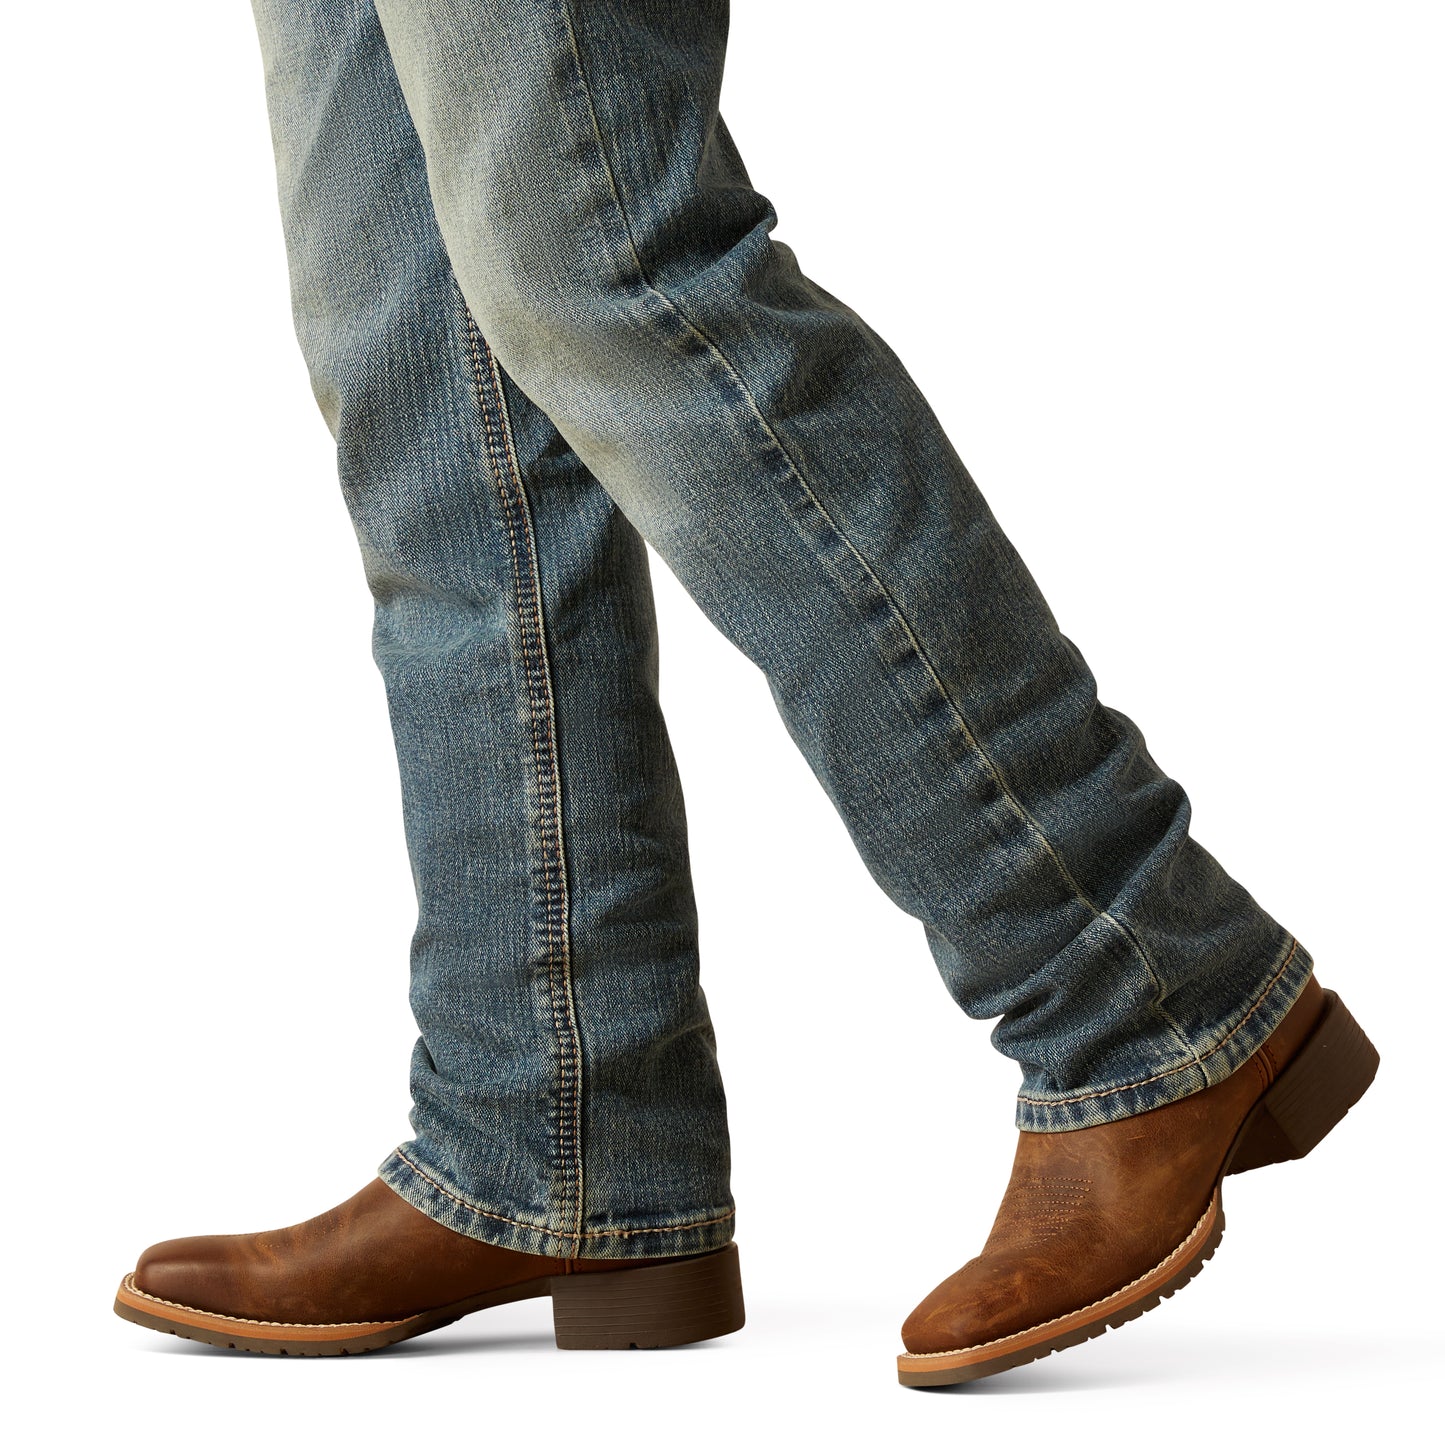 Ariat Youth Boy's B5 Slim Straight Mid-Wash Denim Jeans 10051606